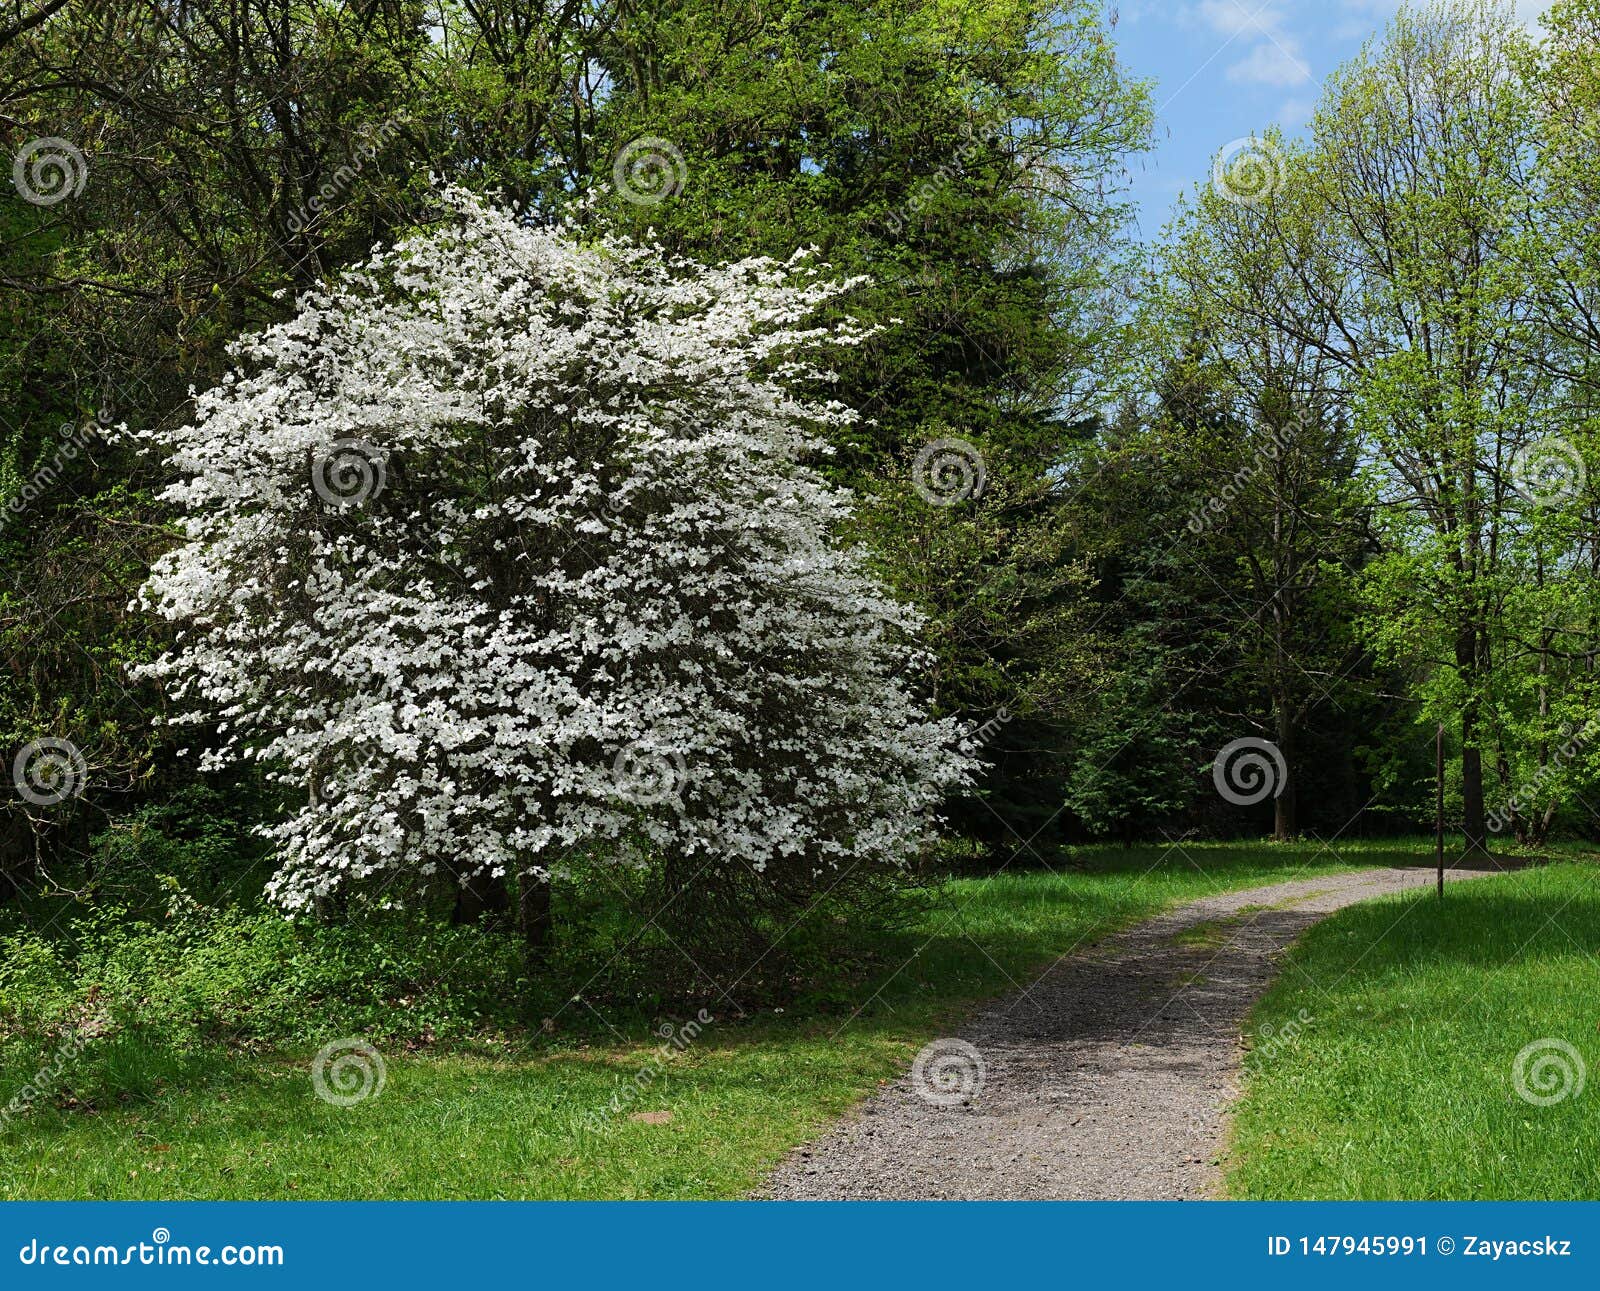 white flowering dogwood tree, latin name cornus florida, in garden near pathway